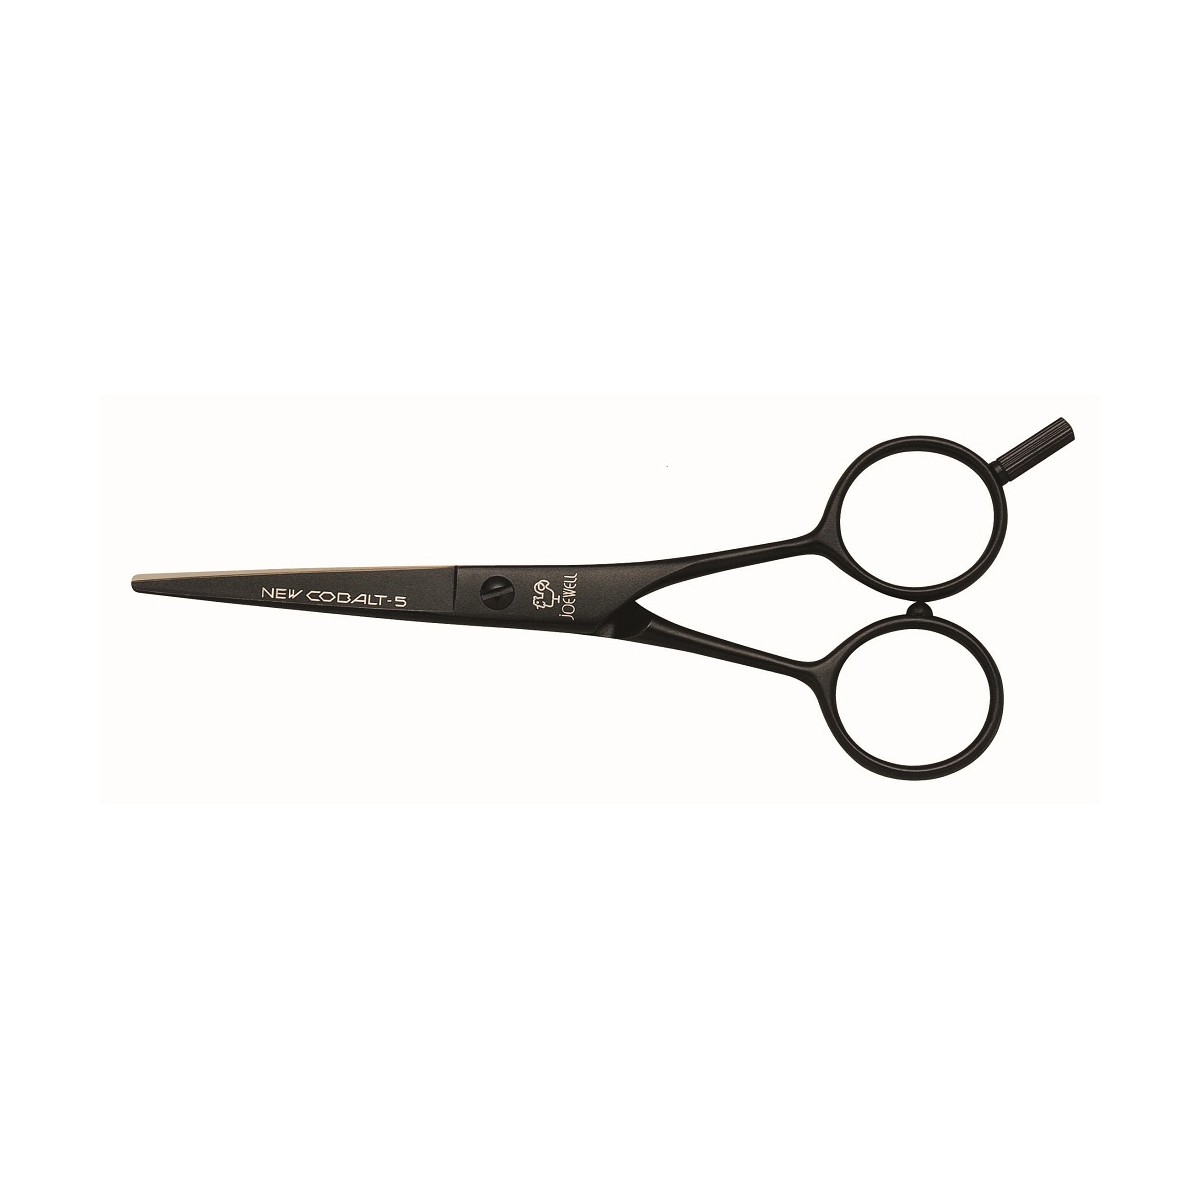 Fancy Hair Scissors Clip Art | Clipart library - Free Clipart Images